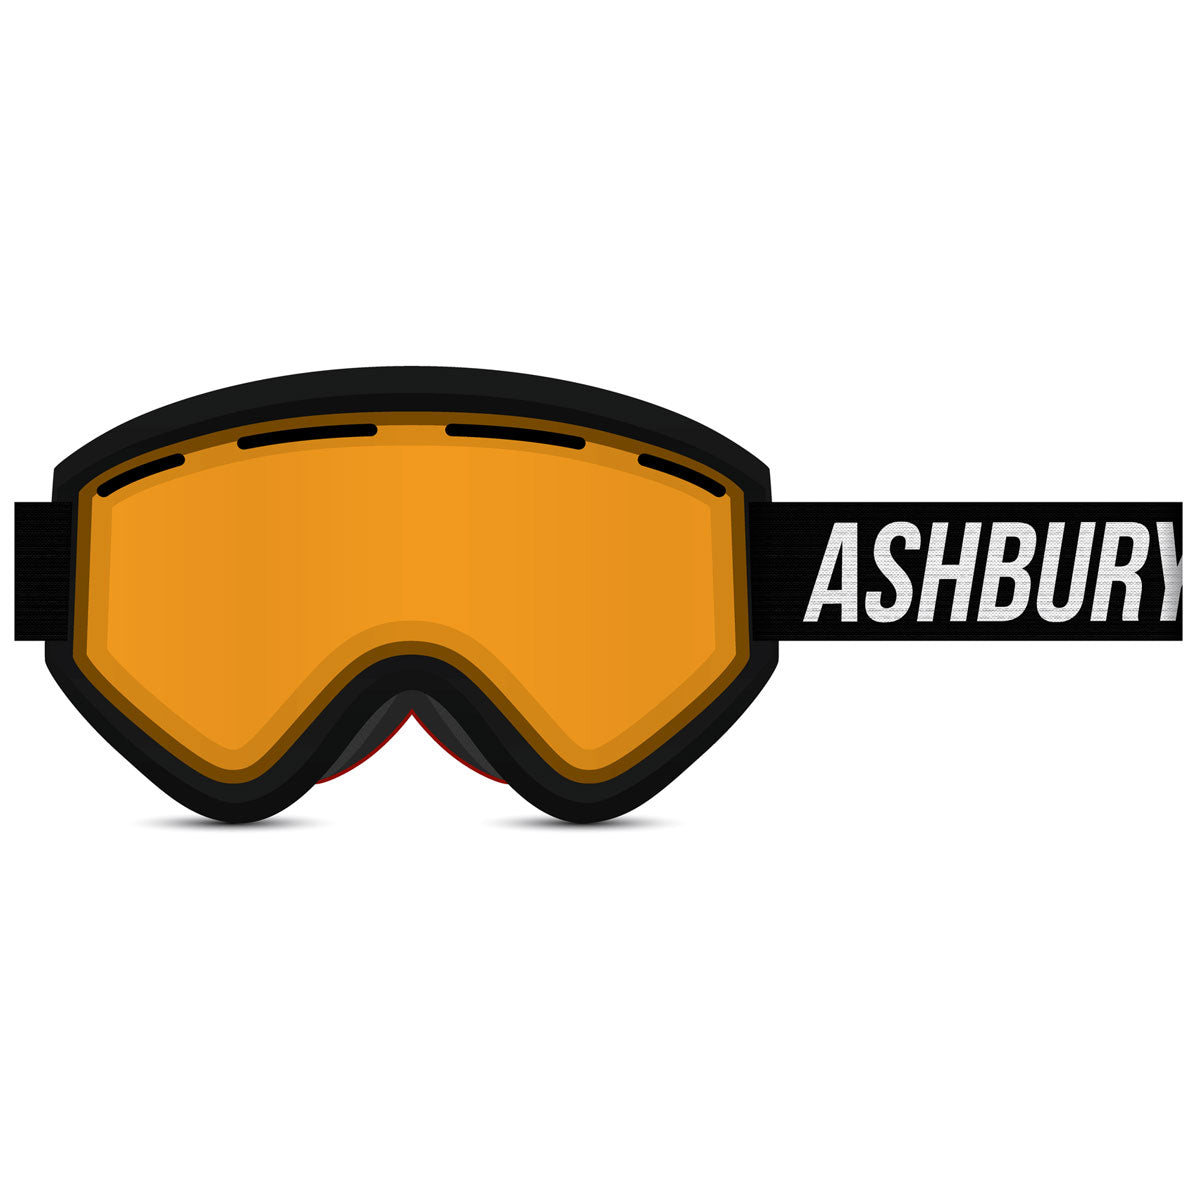 Ashbury Dayvision Snowboard Goggles - Amber image 1